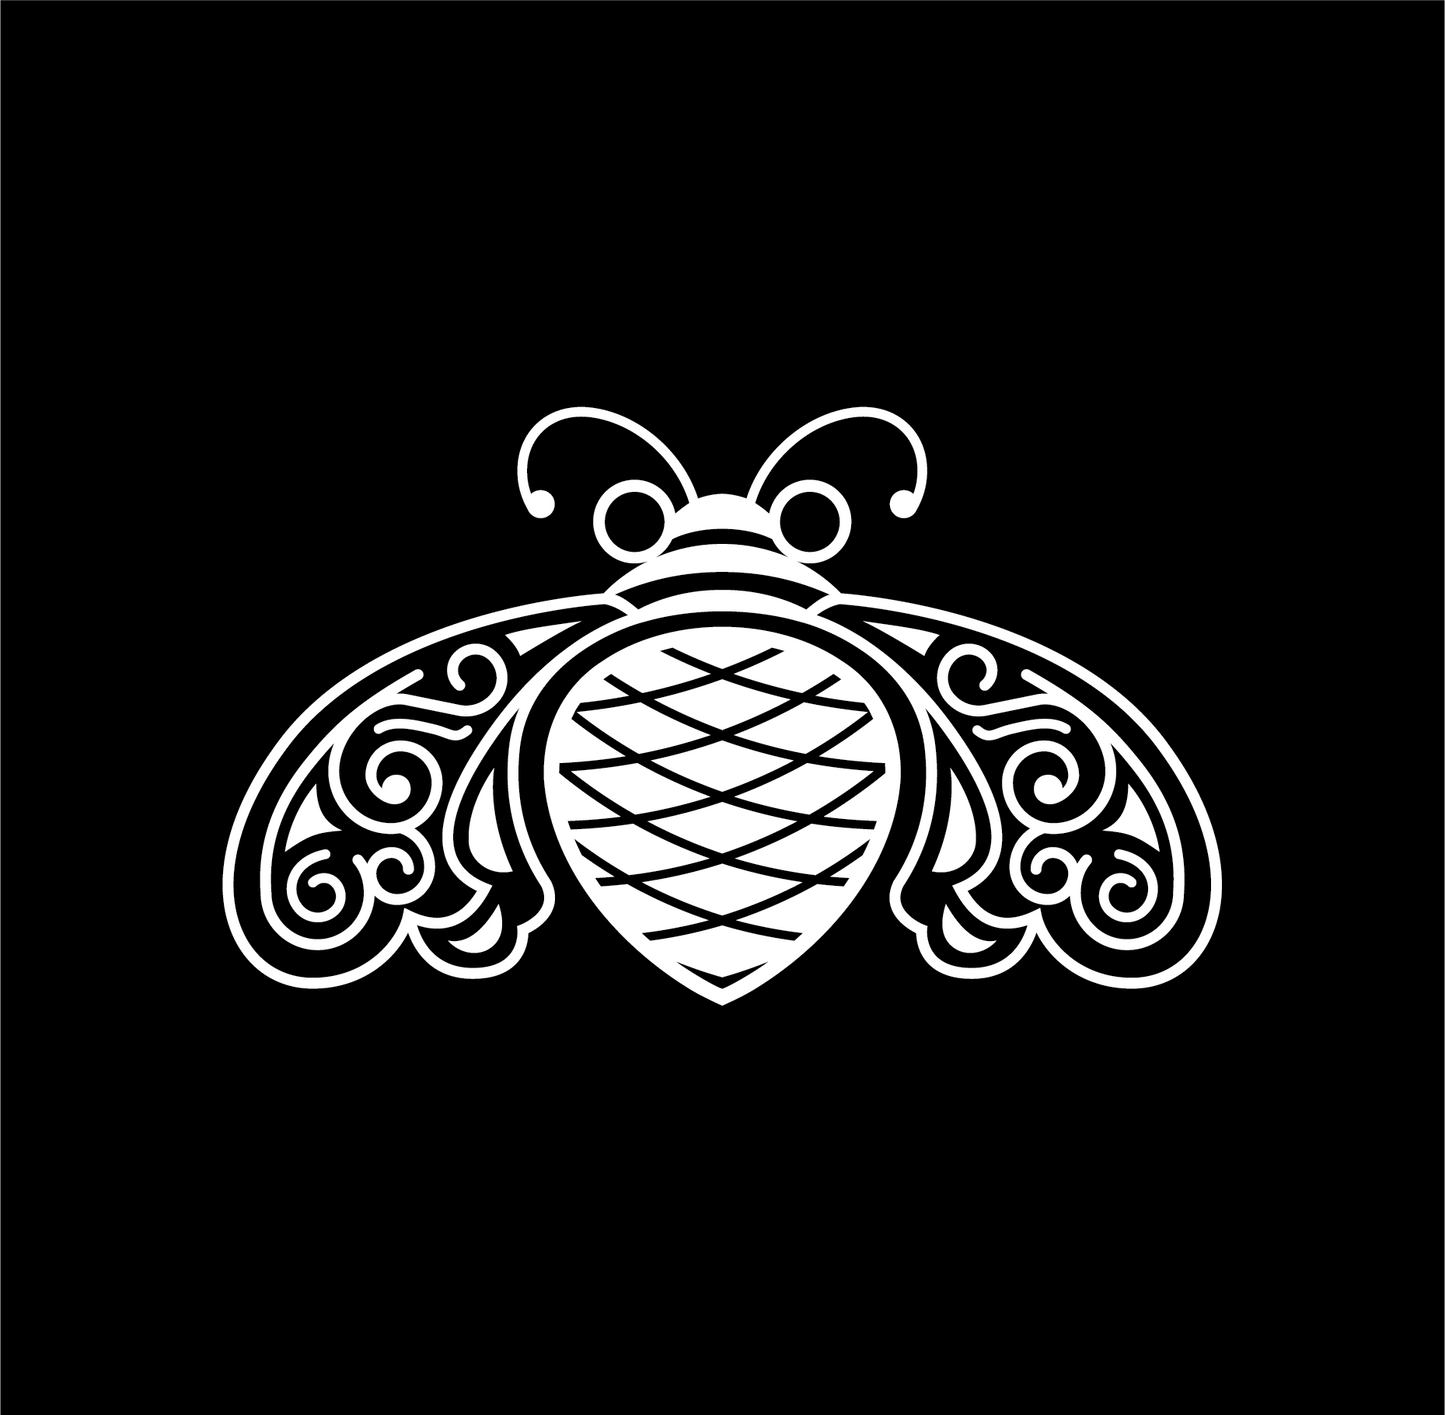 Patron - Bee Logo - B&W